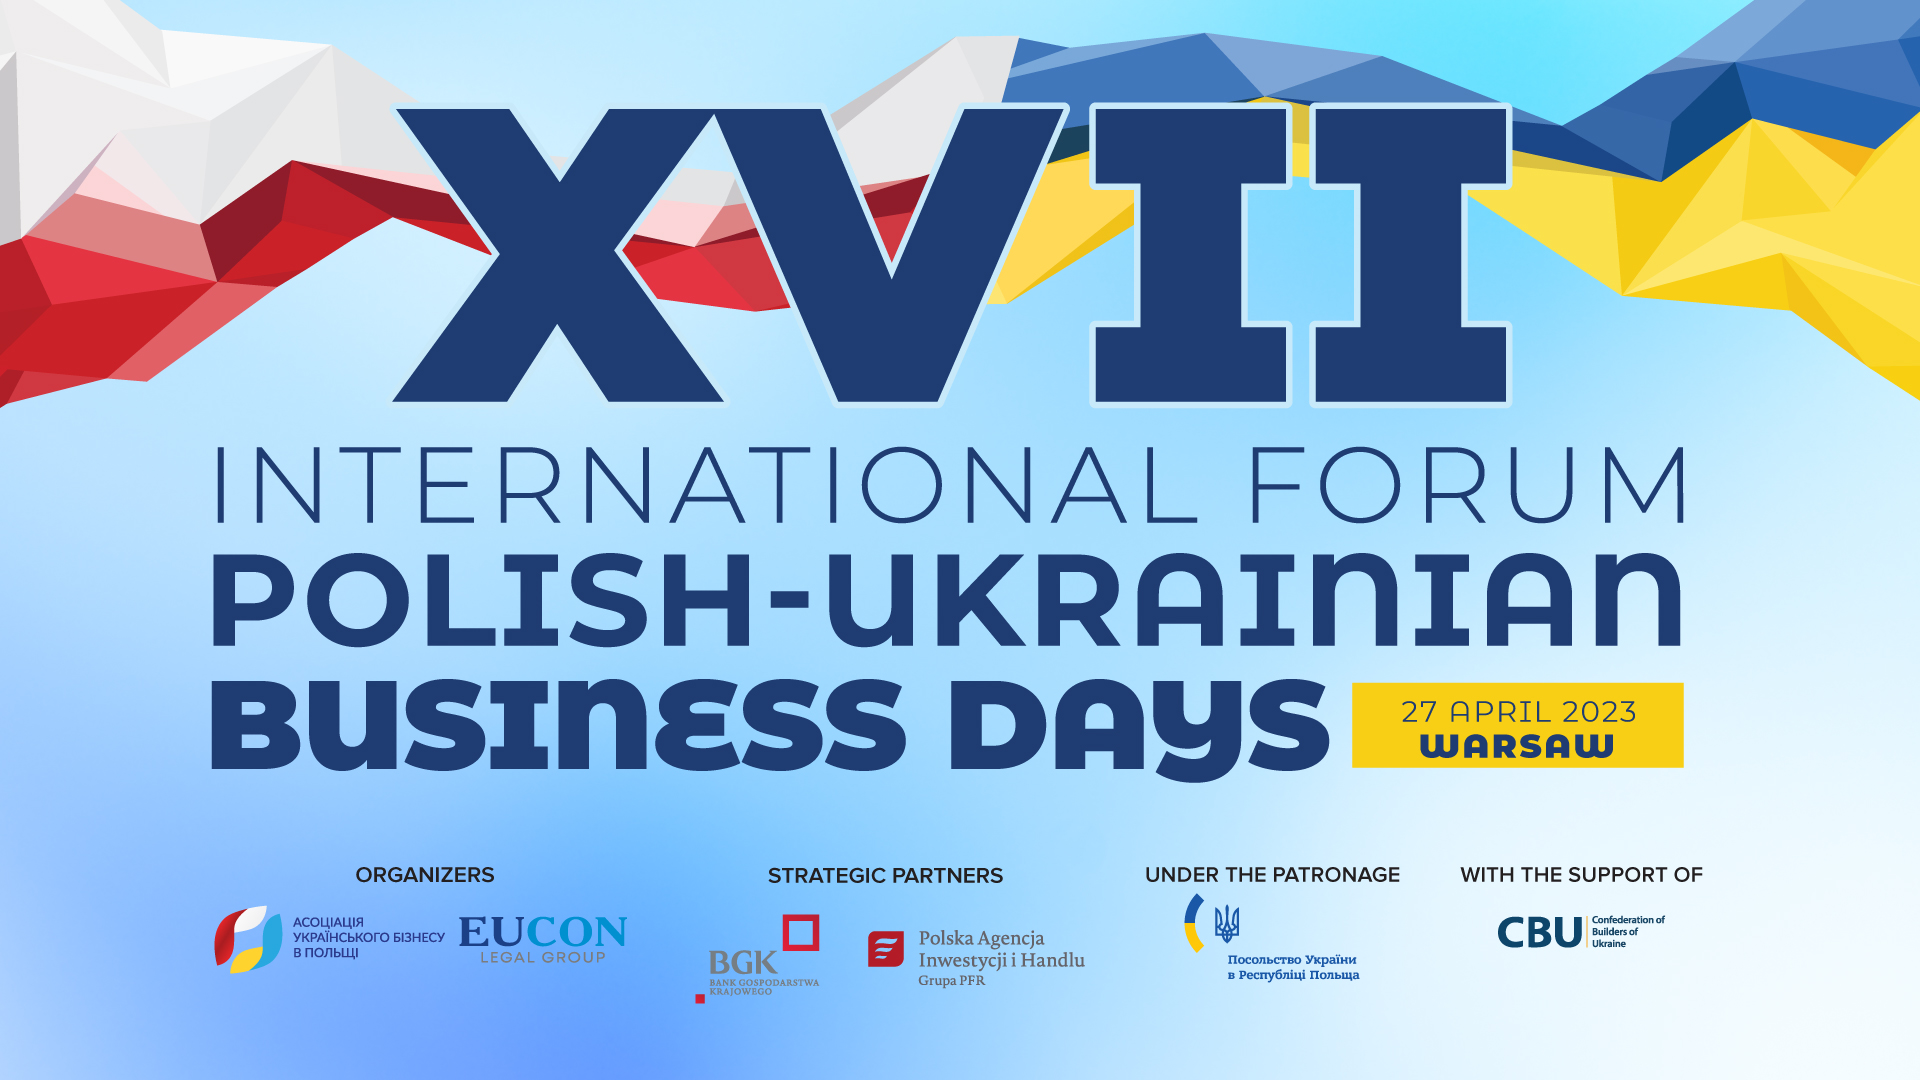 On April 27, the XVII International Forum „Polish-Ukrainian Business Days“ will be held in Warsaw